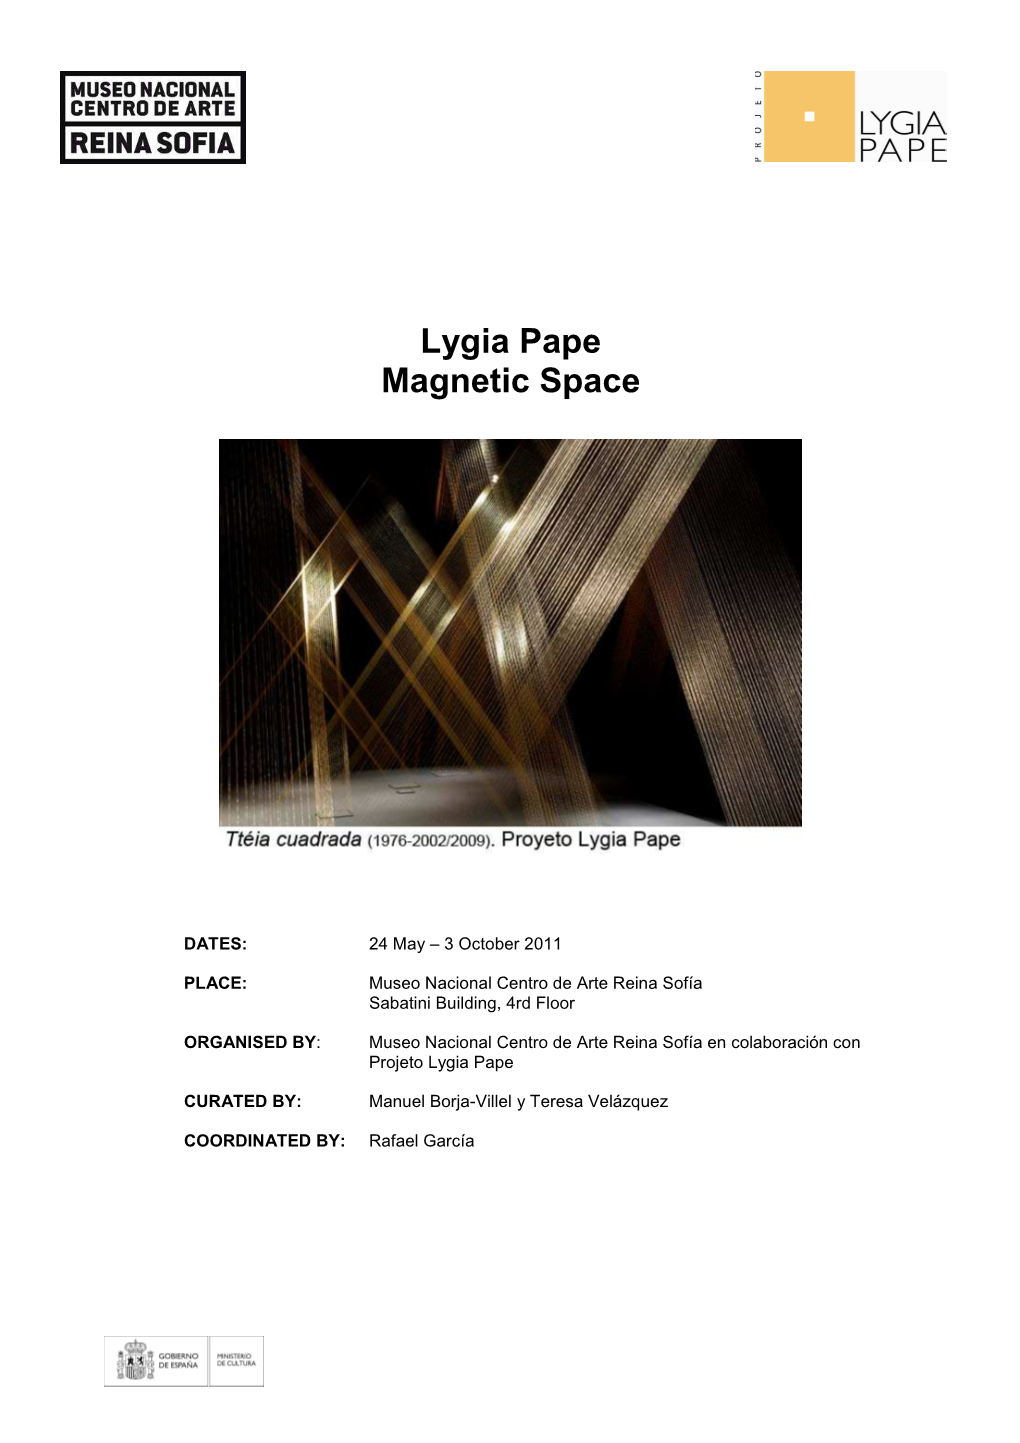 Press Release Lygia Pape